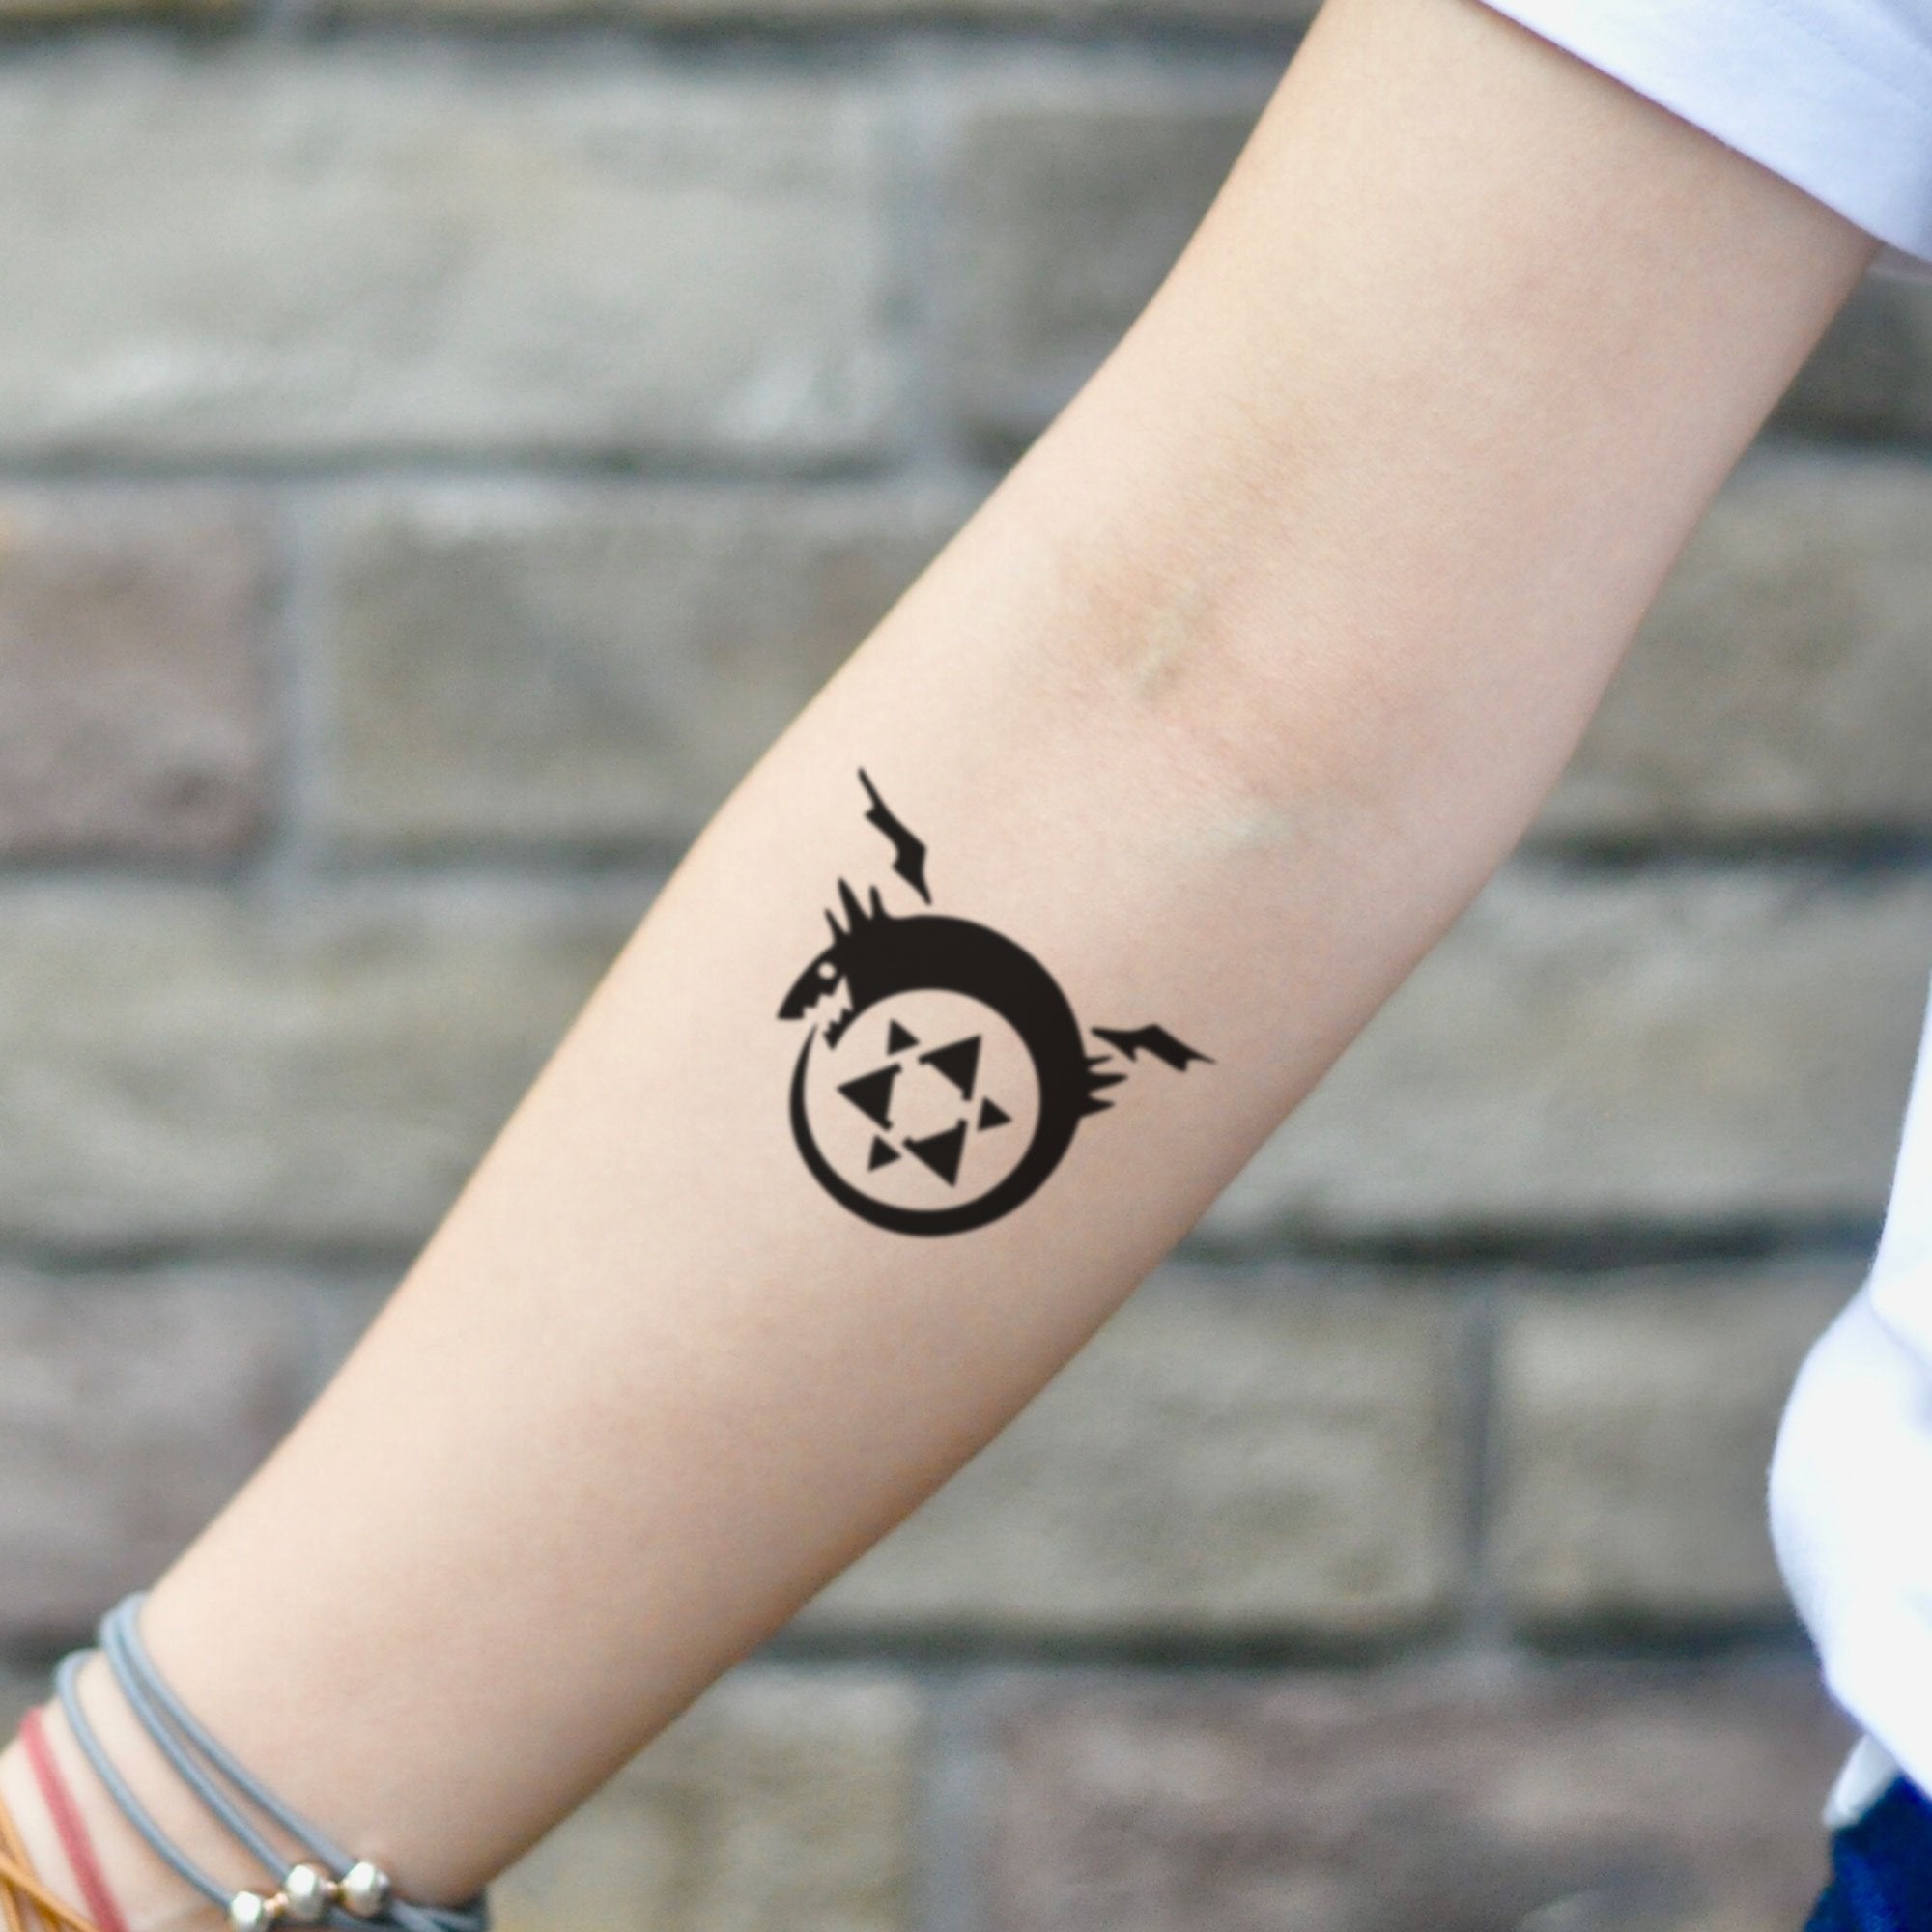 Fullmetal Alchemist FMA Homunculus Temporary Tattoo Sticker - OhMyTat